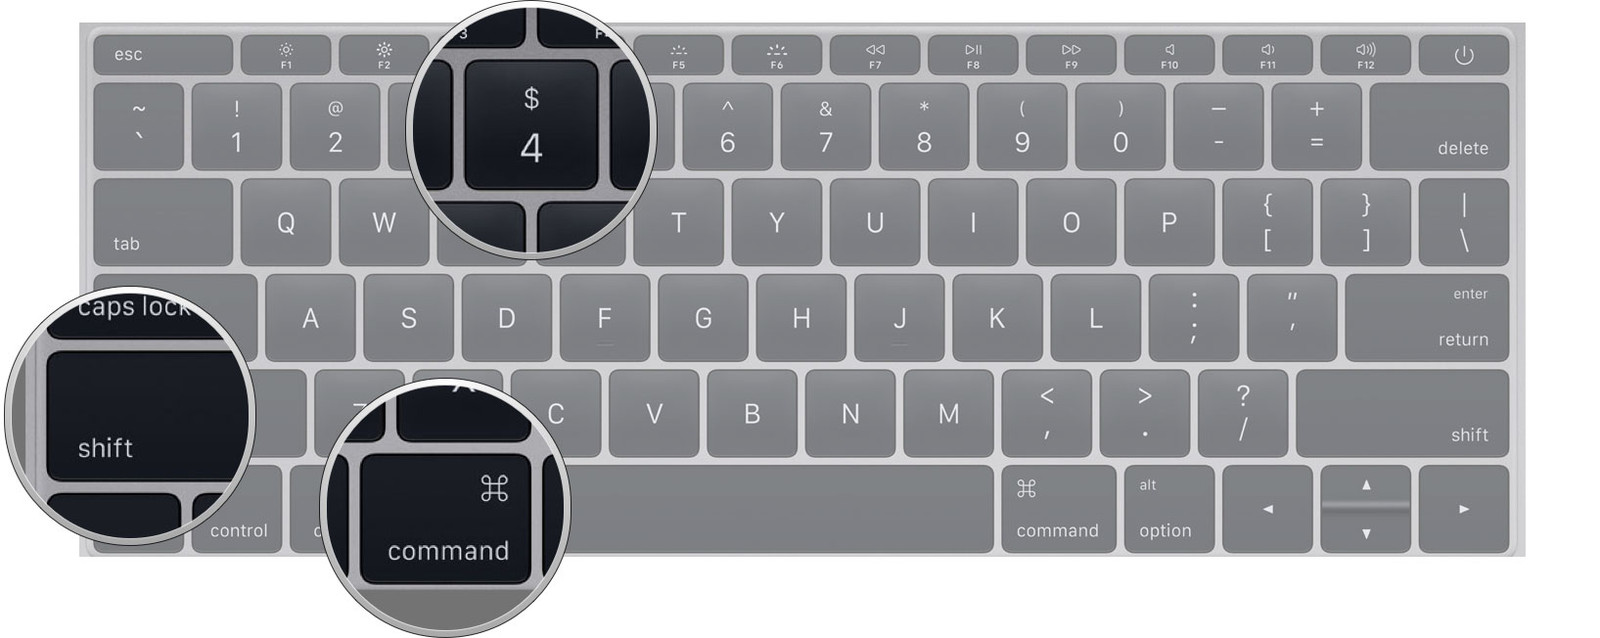 keyboard shortcuts for screenshot on mac